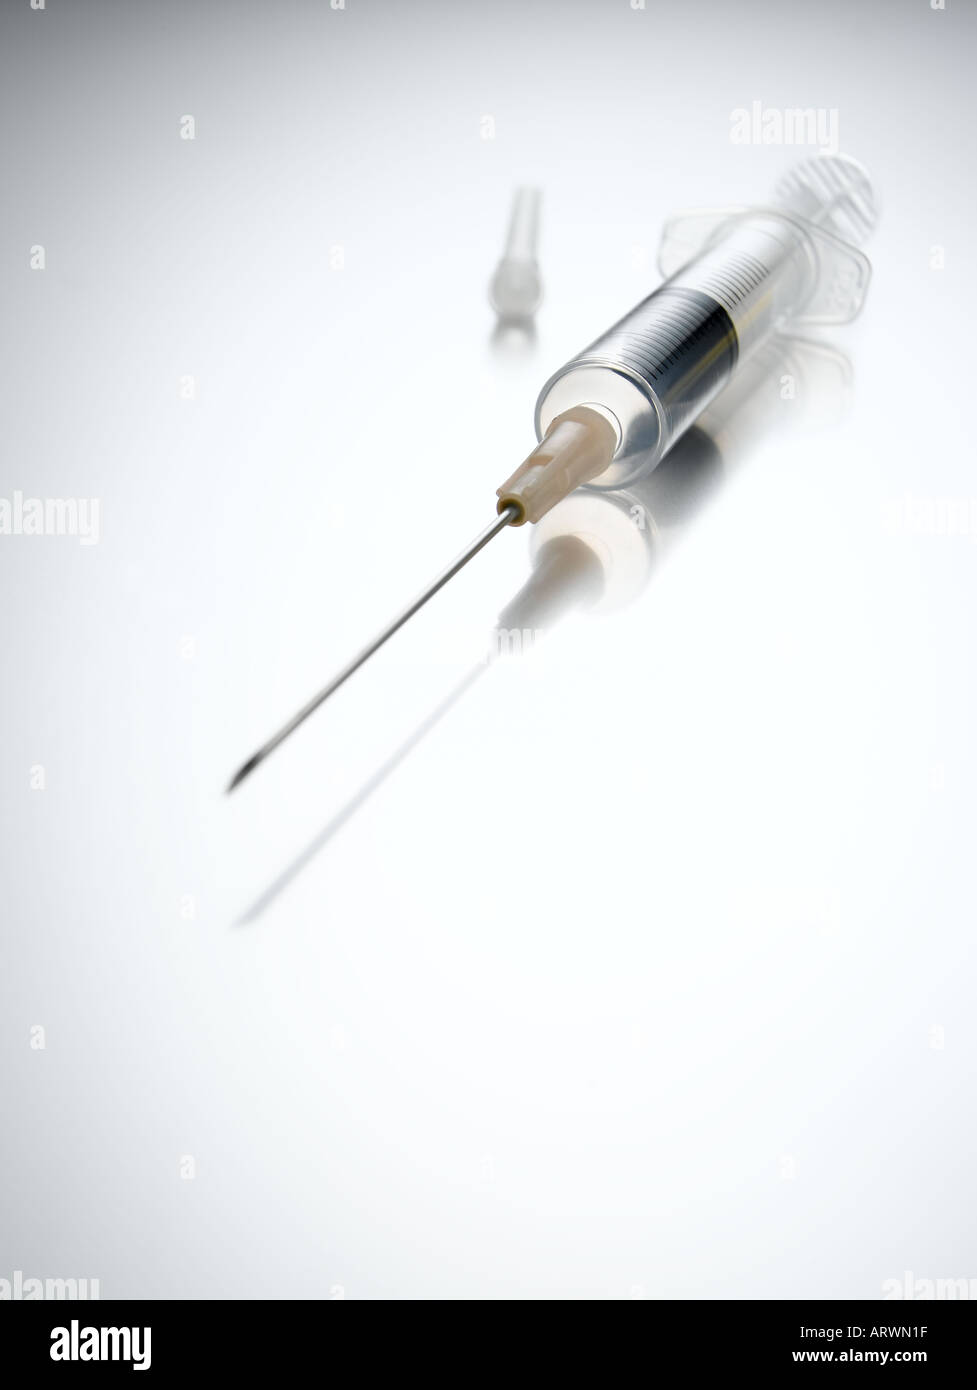 hypodermic syringe Stock Photo